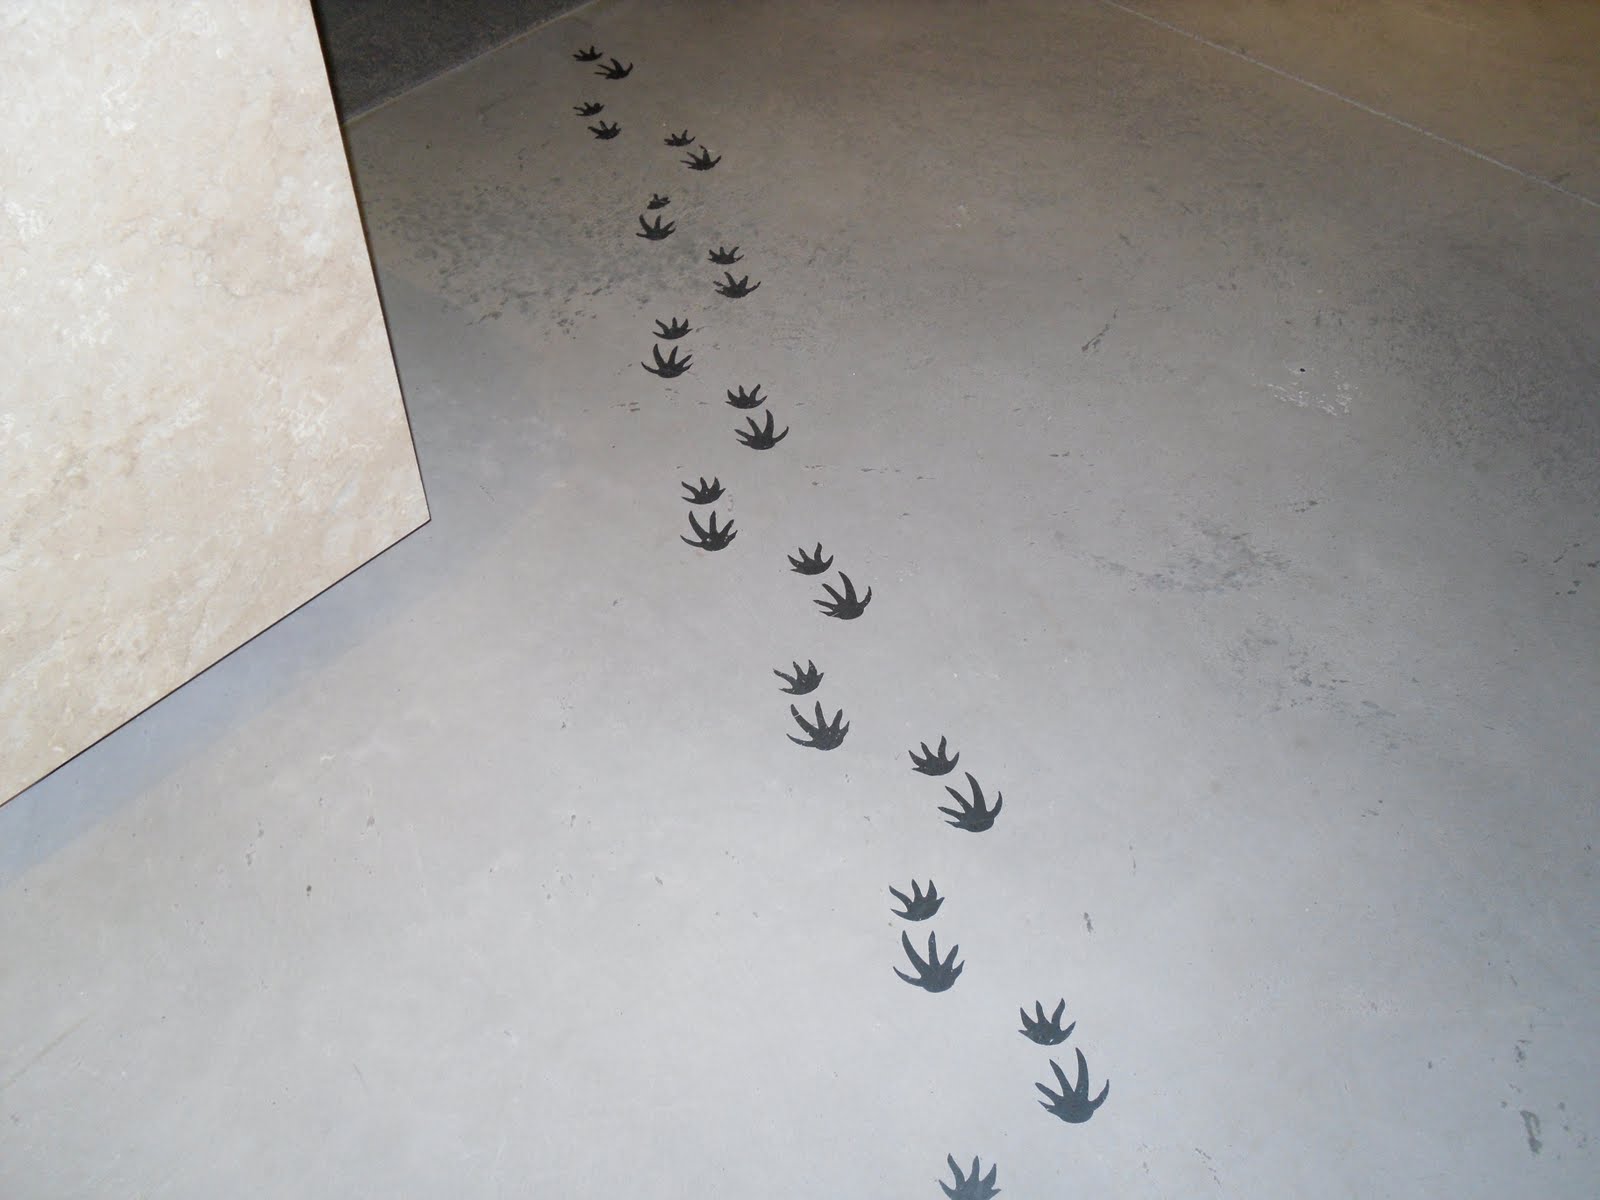 iguana footprint clipart - photo #44